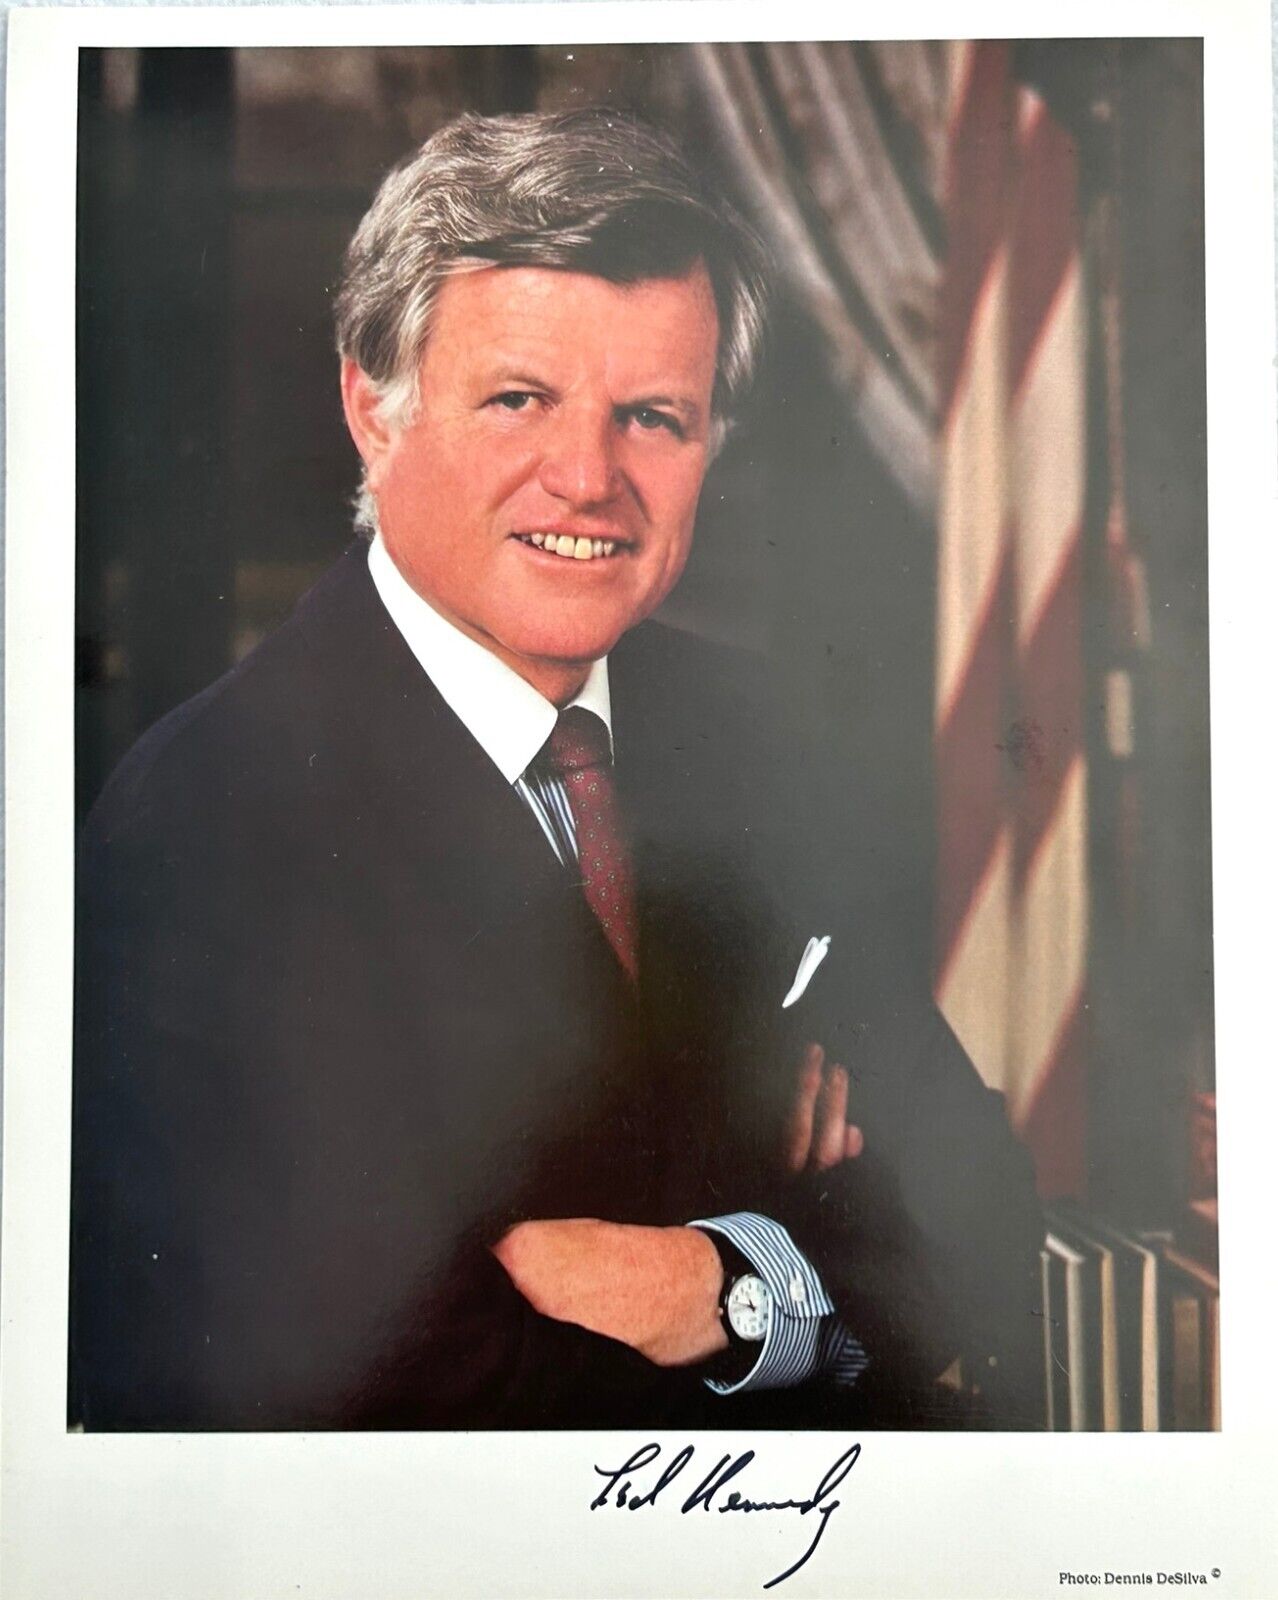 Ted Kennedy Hand Signed 8x10 Photo - Massachusetts Senator